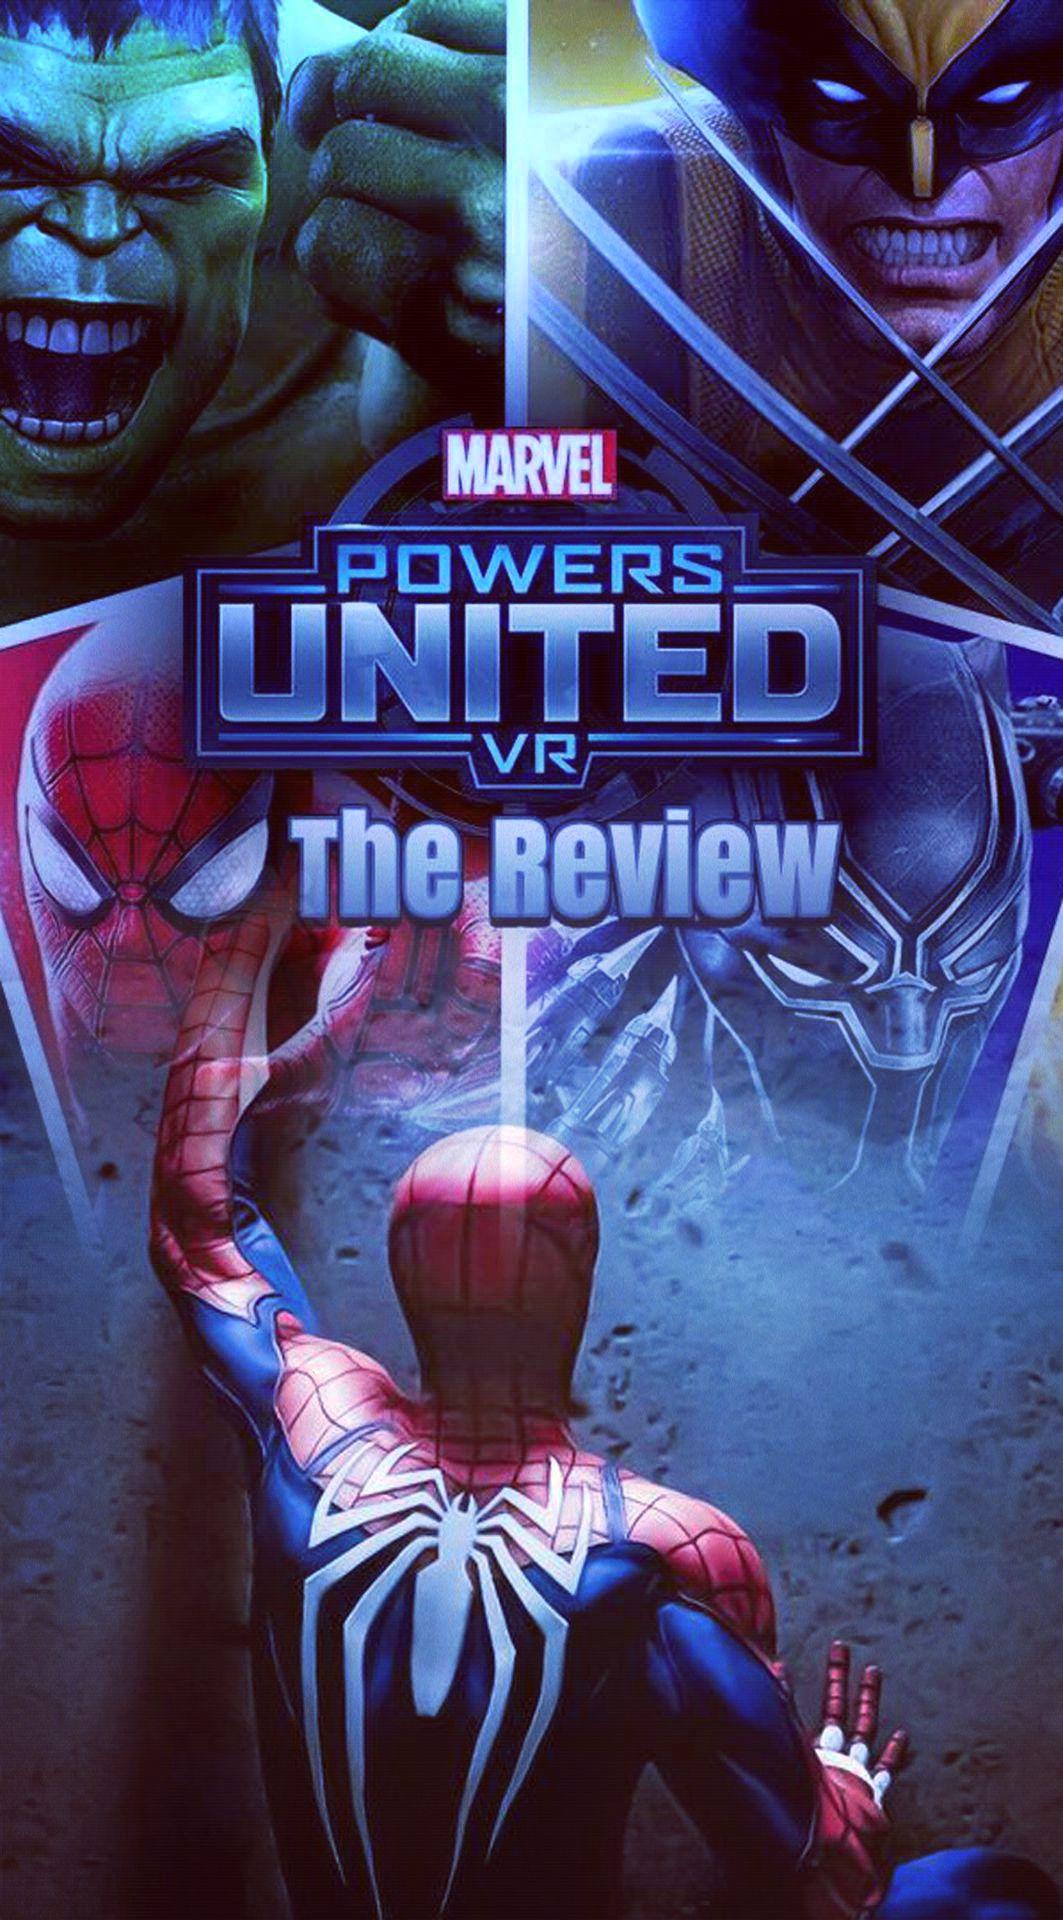 MARVEL Powers United VR - Metacritic